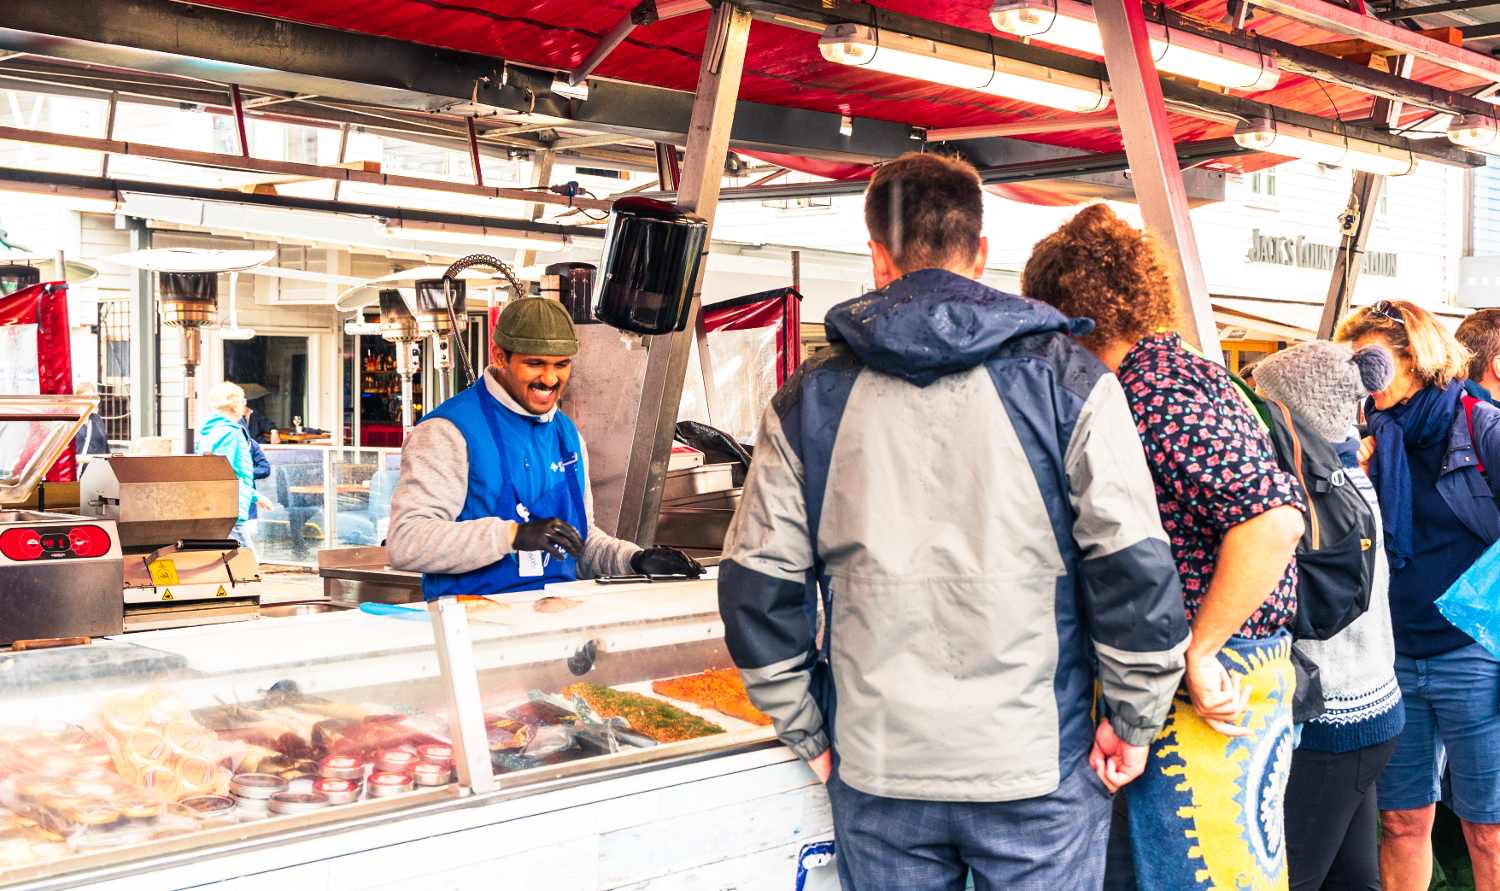 The Fish Market in Bergen